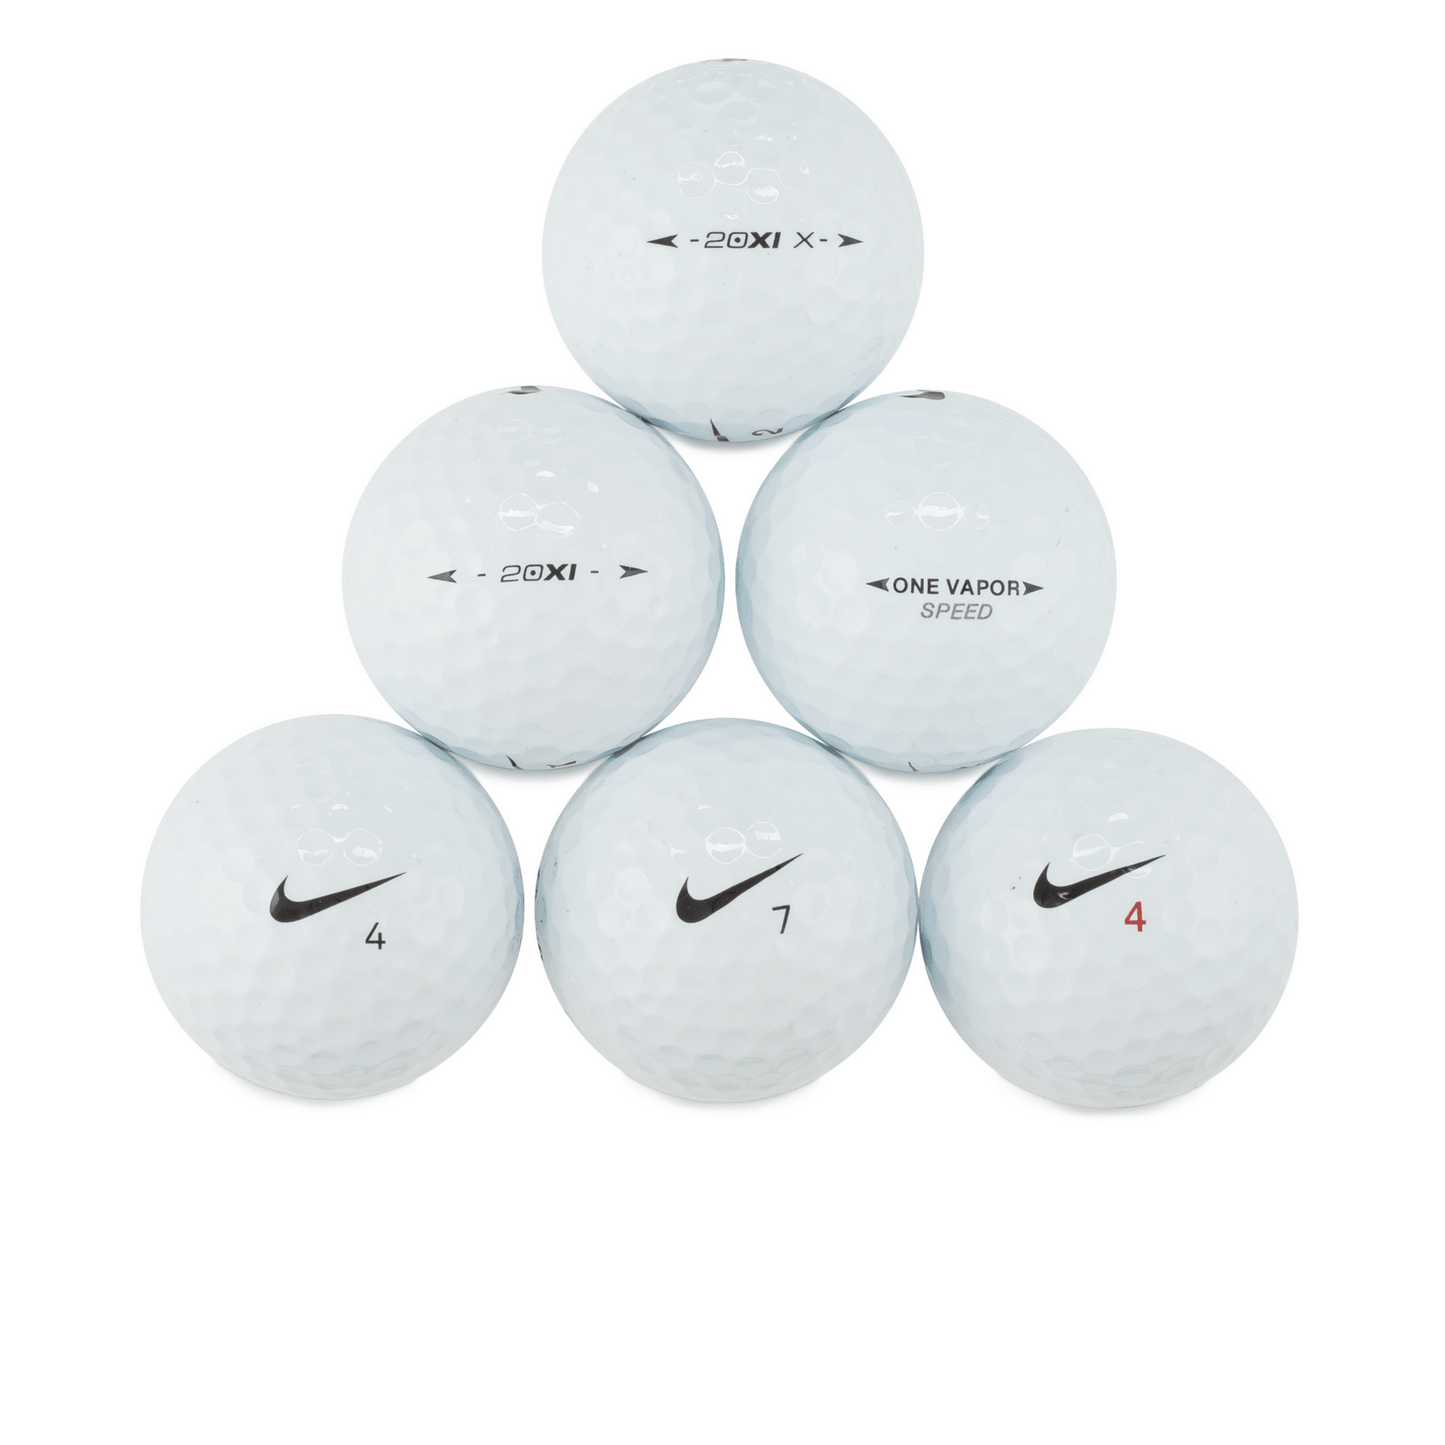 Used Nike 20XI/RZN Mix Golf Balls - 60 Count